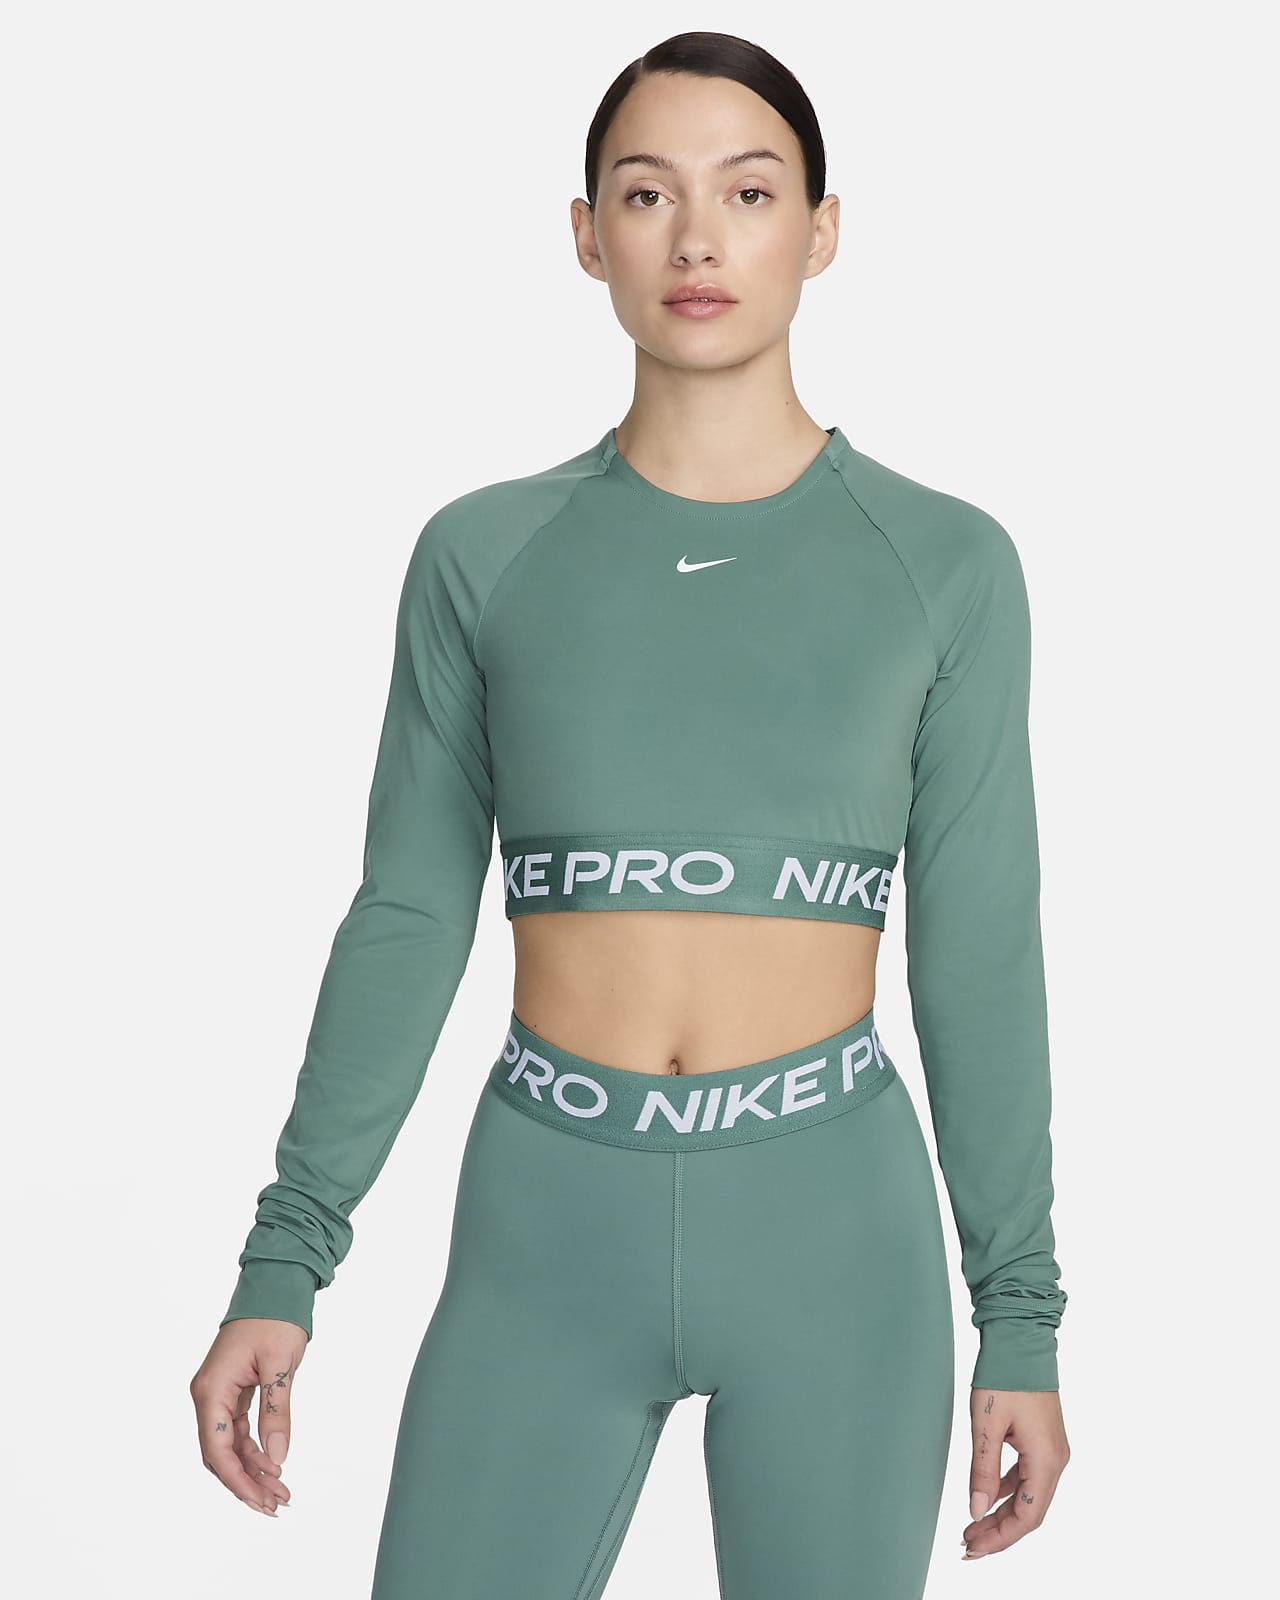 Nike Womens Pro Crop Tights Training Pants